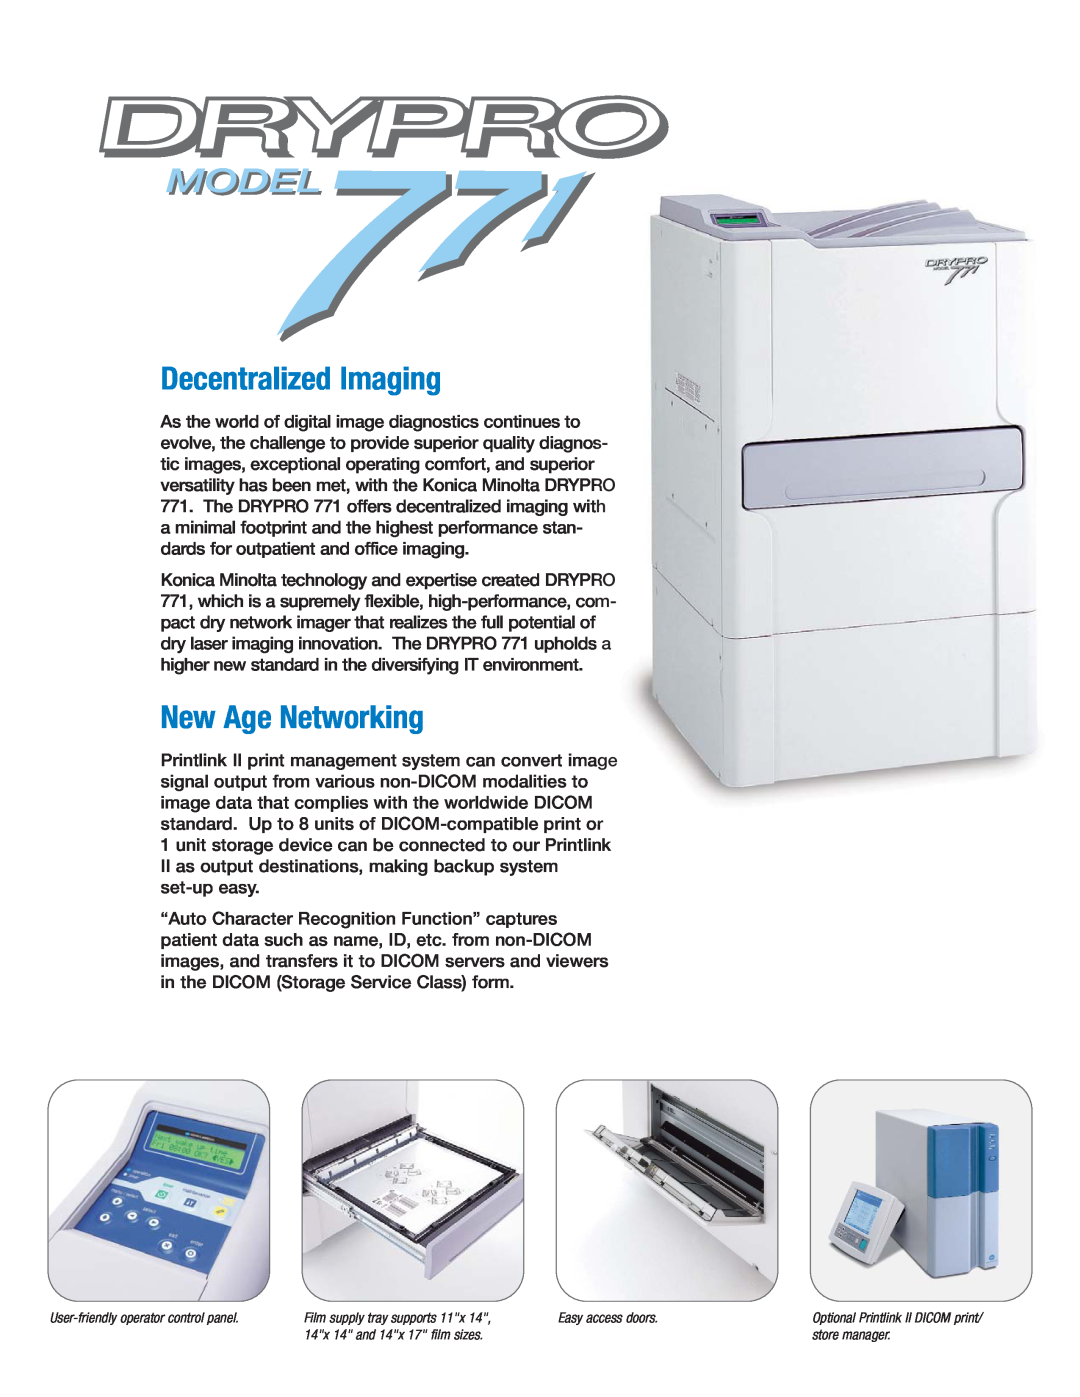 Konica Minolta 771 manual Decentralized Imaging, New Age Networking, User-friendlyoperator control panel, Easy access doors 